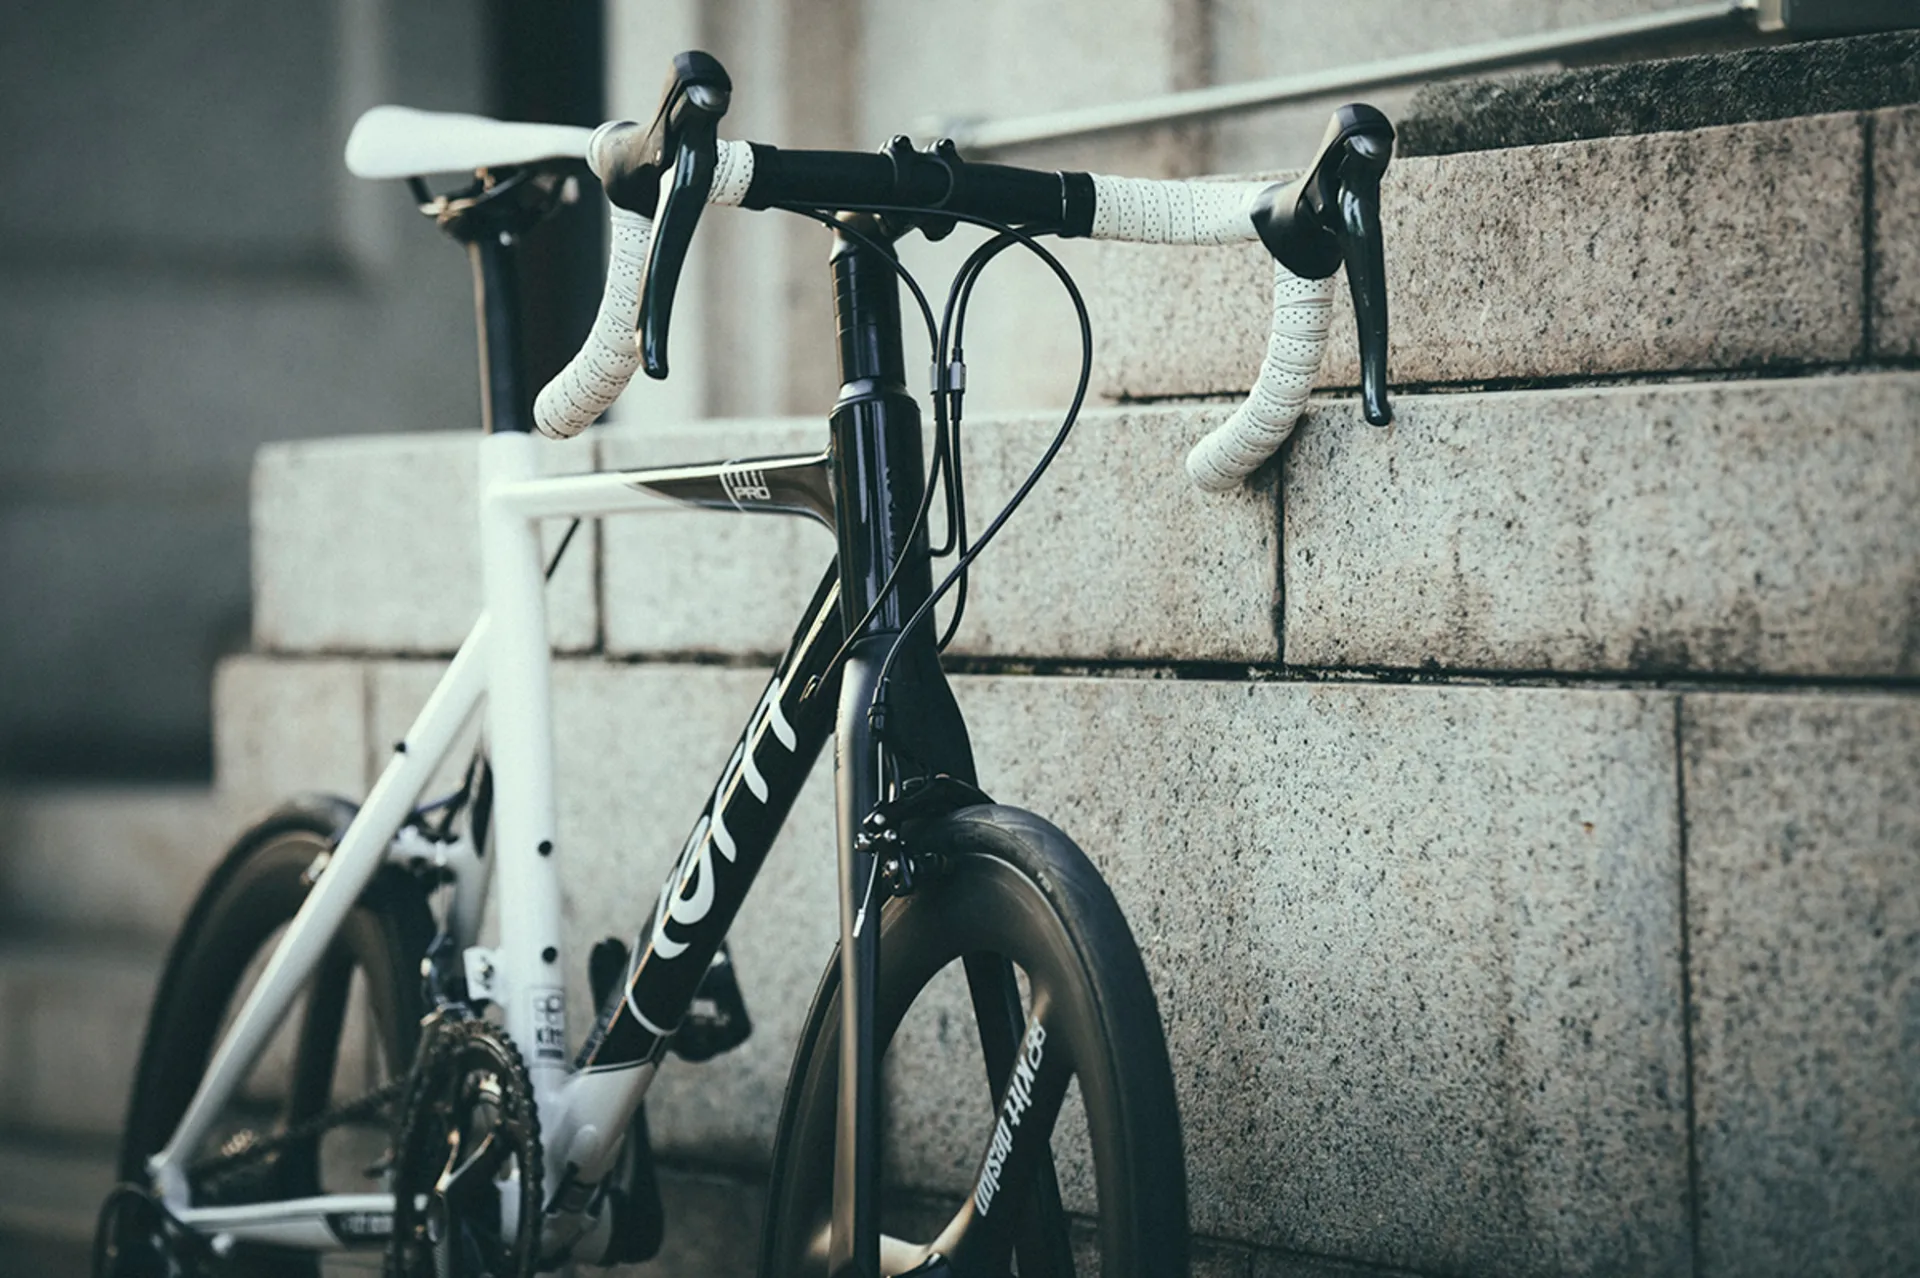 Surge Pro | Tern Bicycles